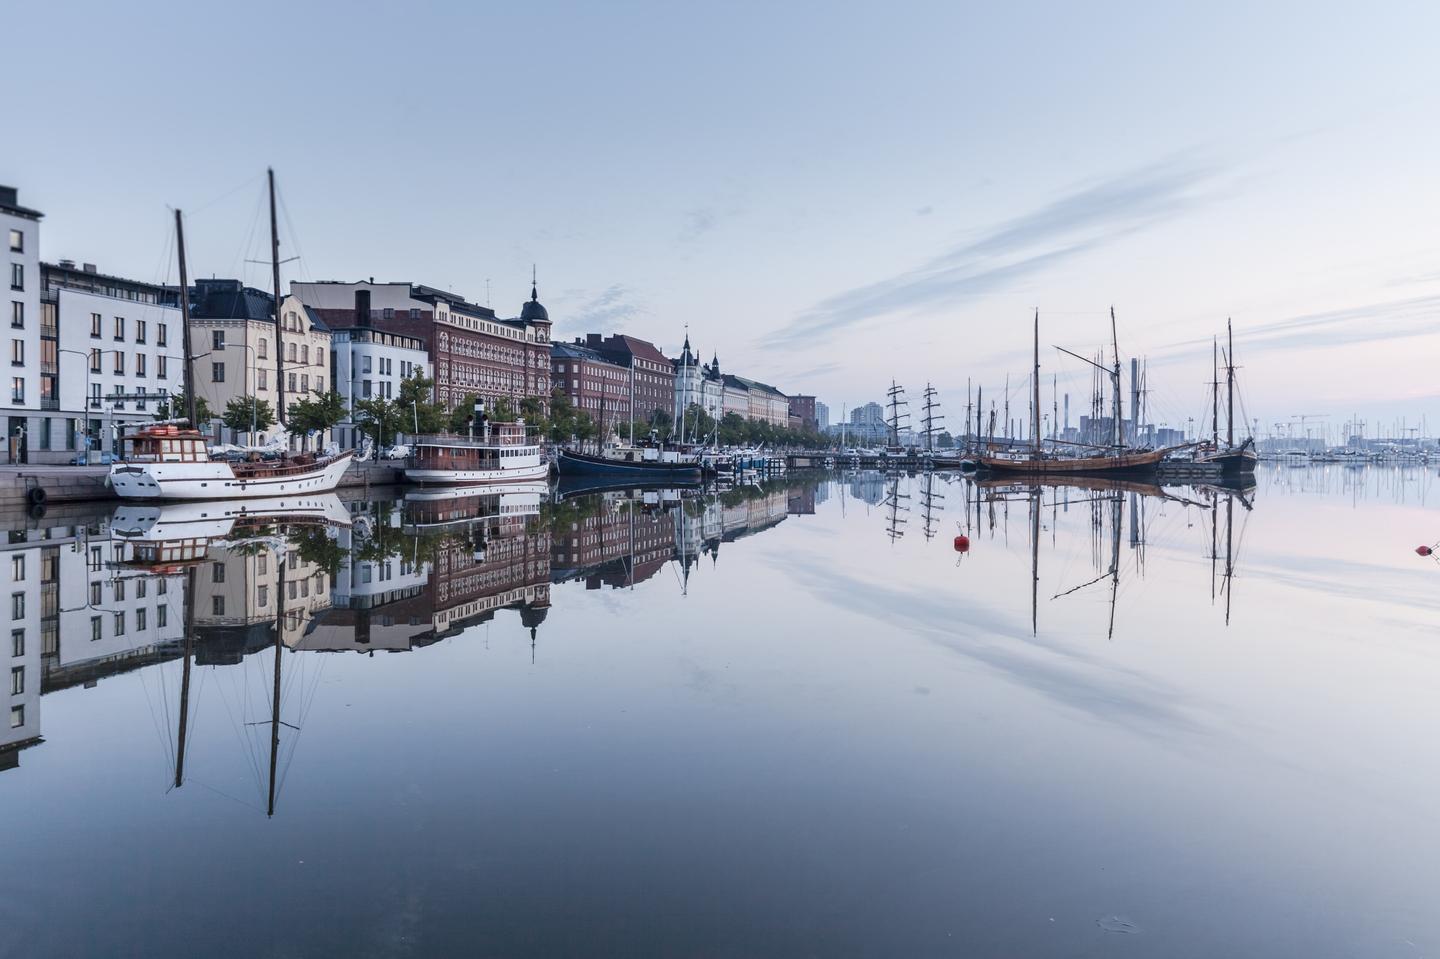 Scenic houses by a body of water in Helsinki